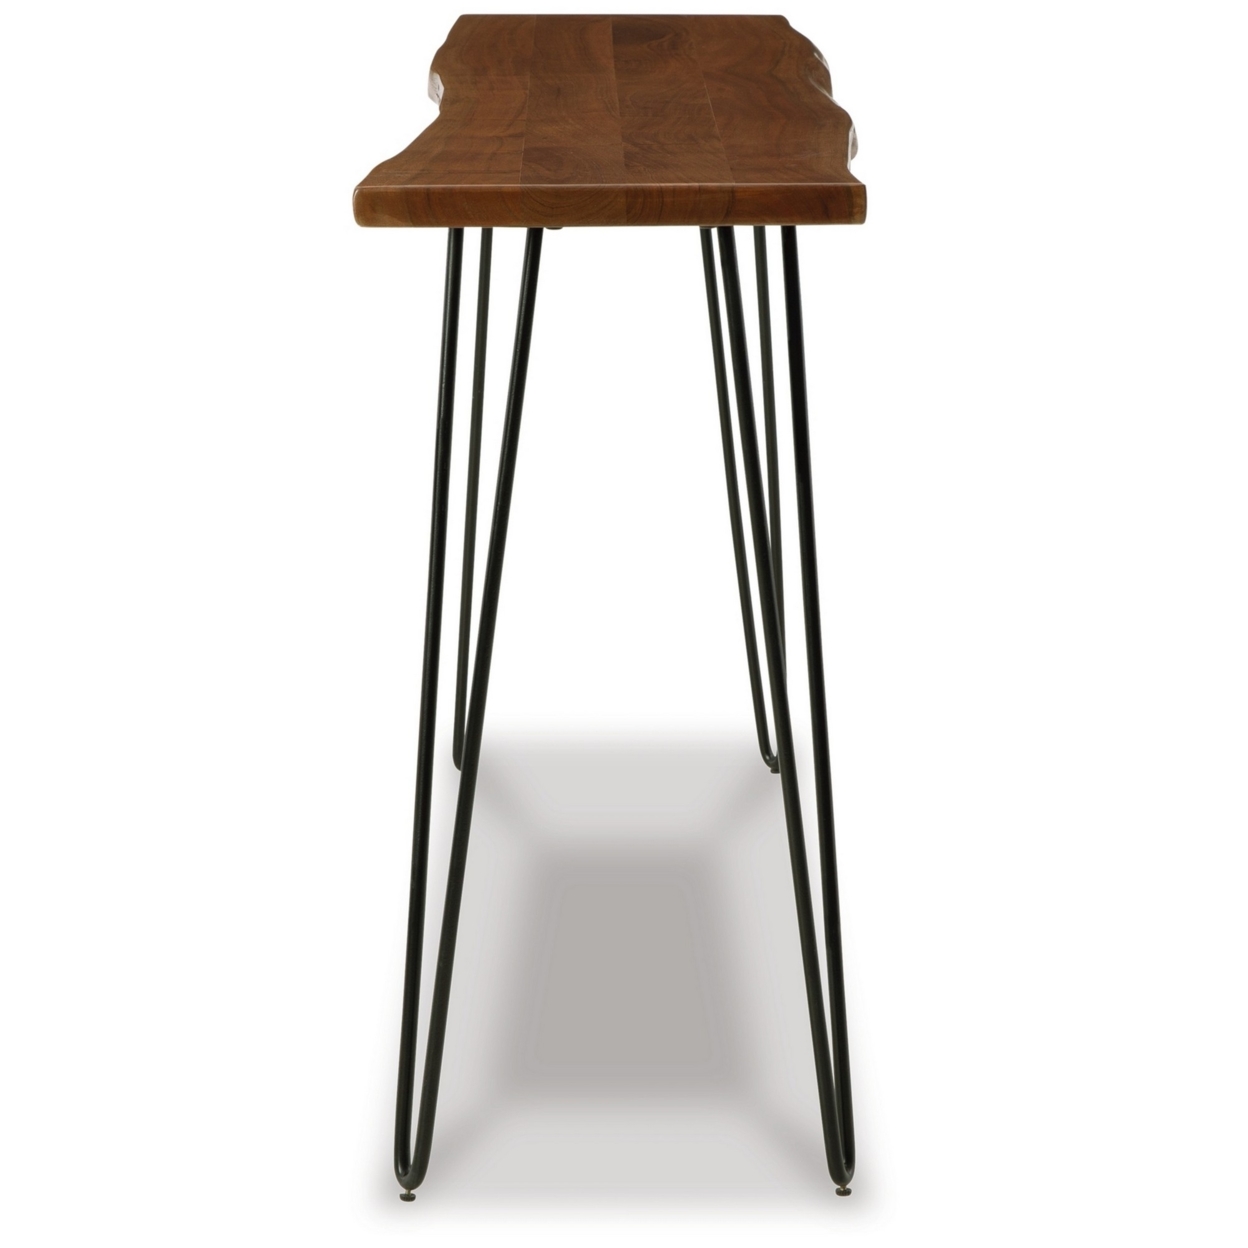 70 Inch Counter Height Dining Table, Light Brown Wood, Black Metal Legs- Saltoro Sherpi